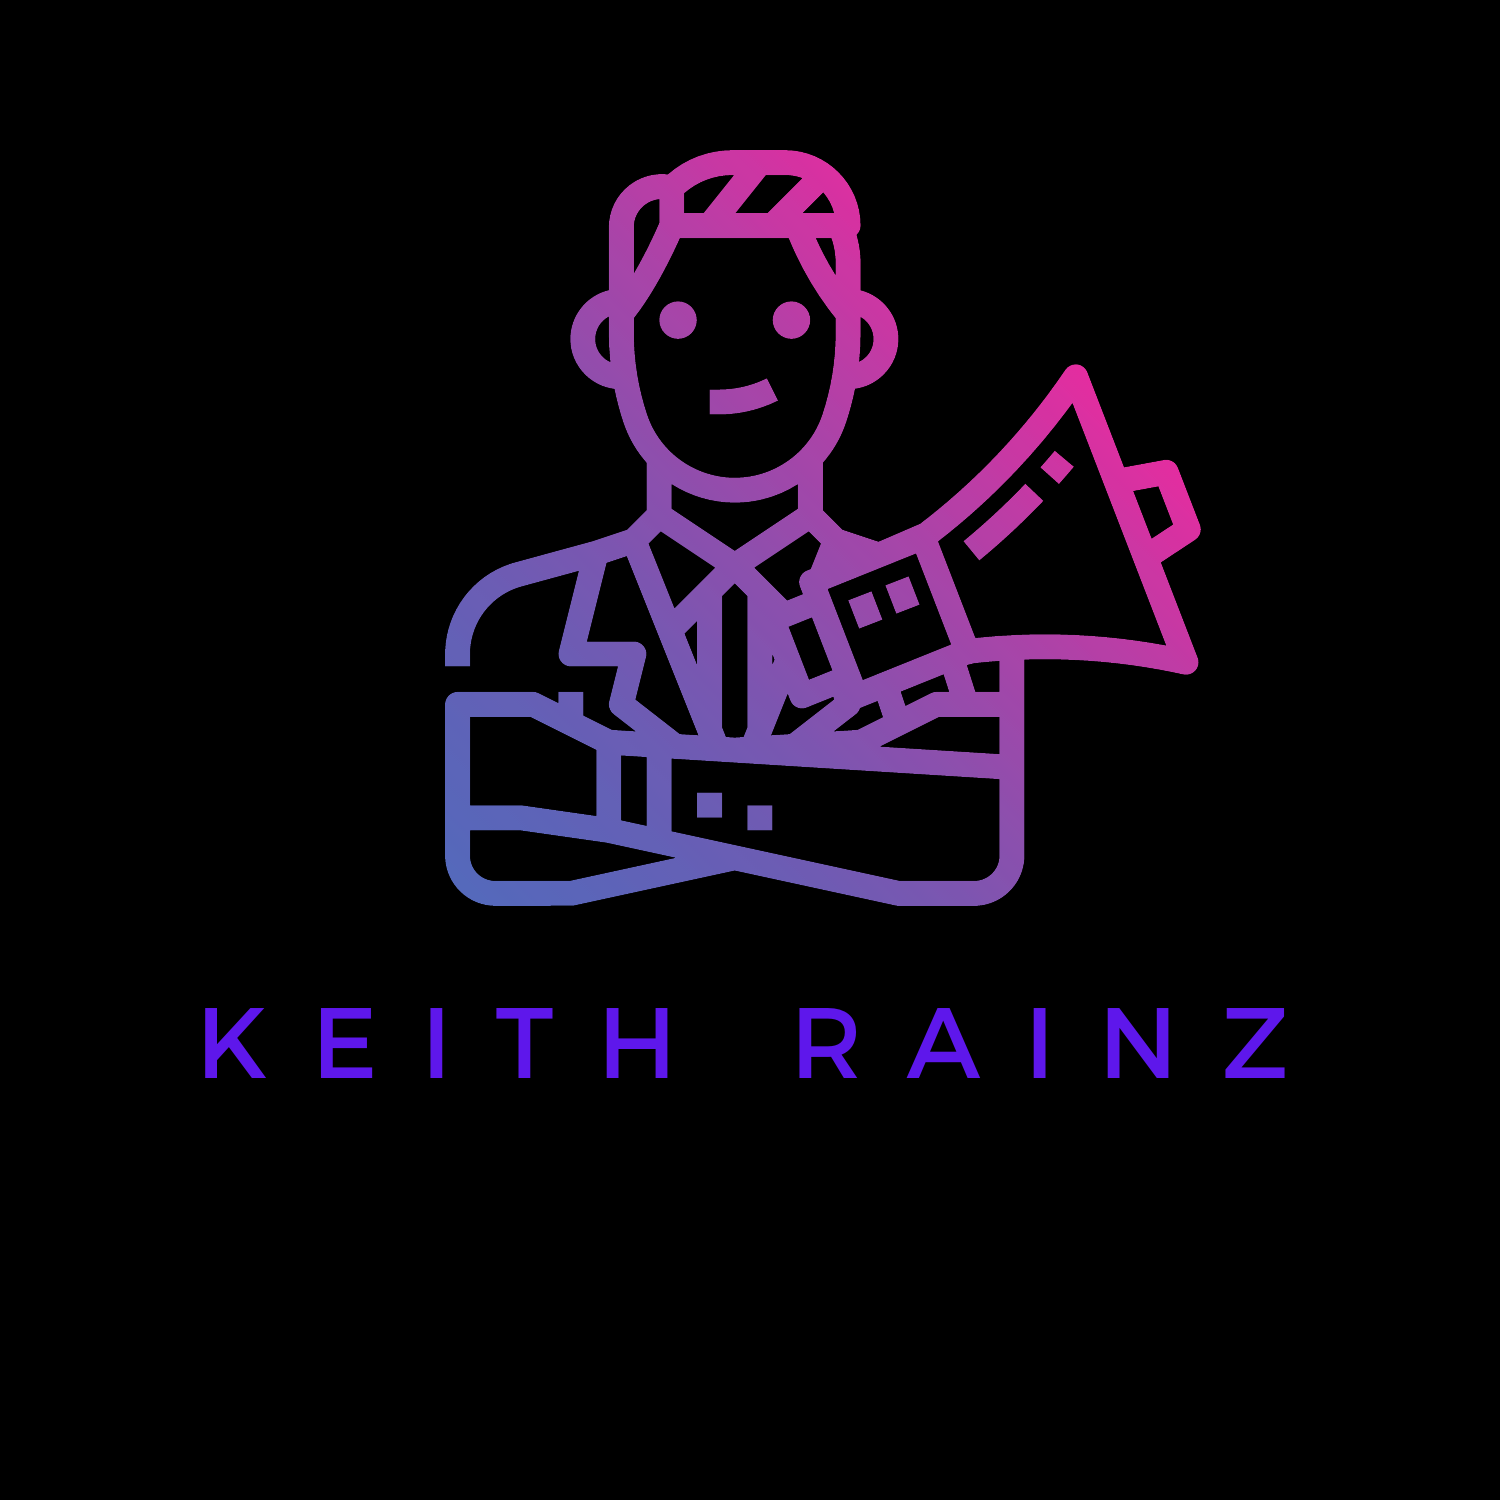 Keith Rainz profile on Qualified.One